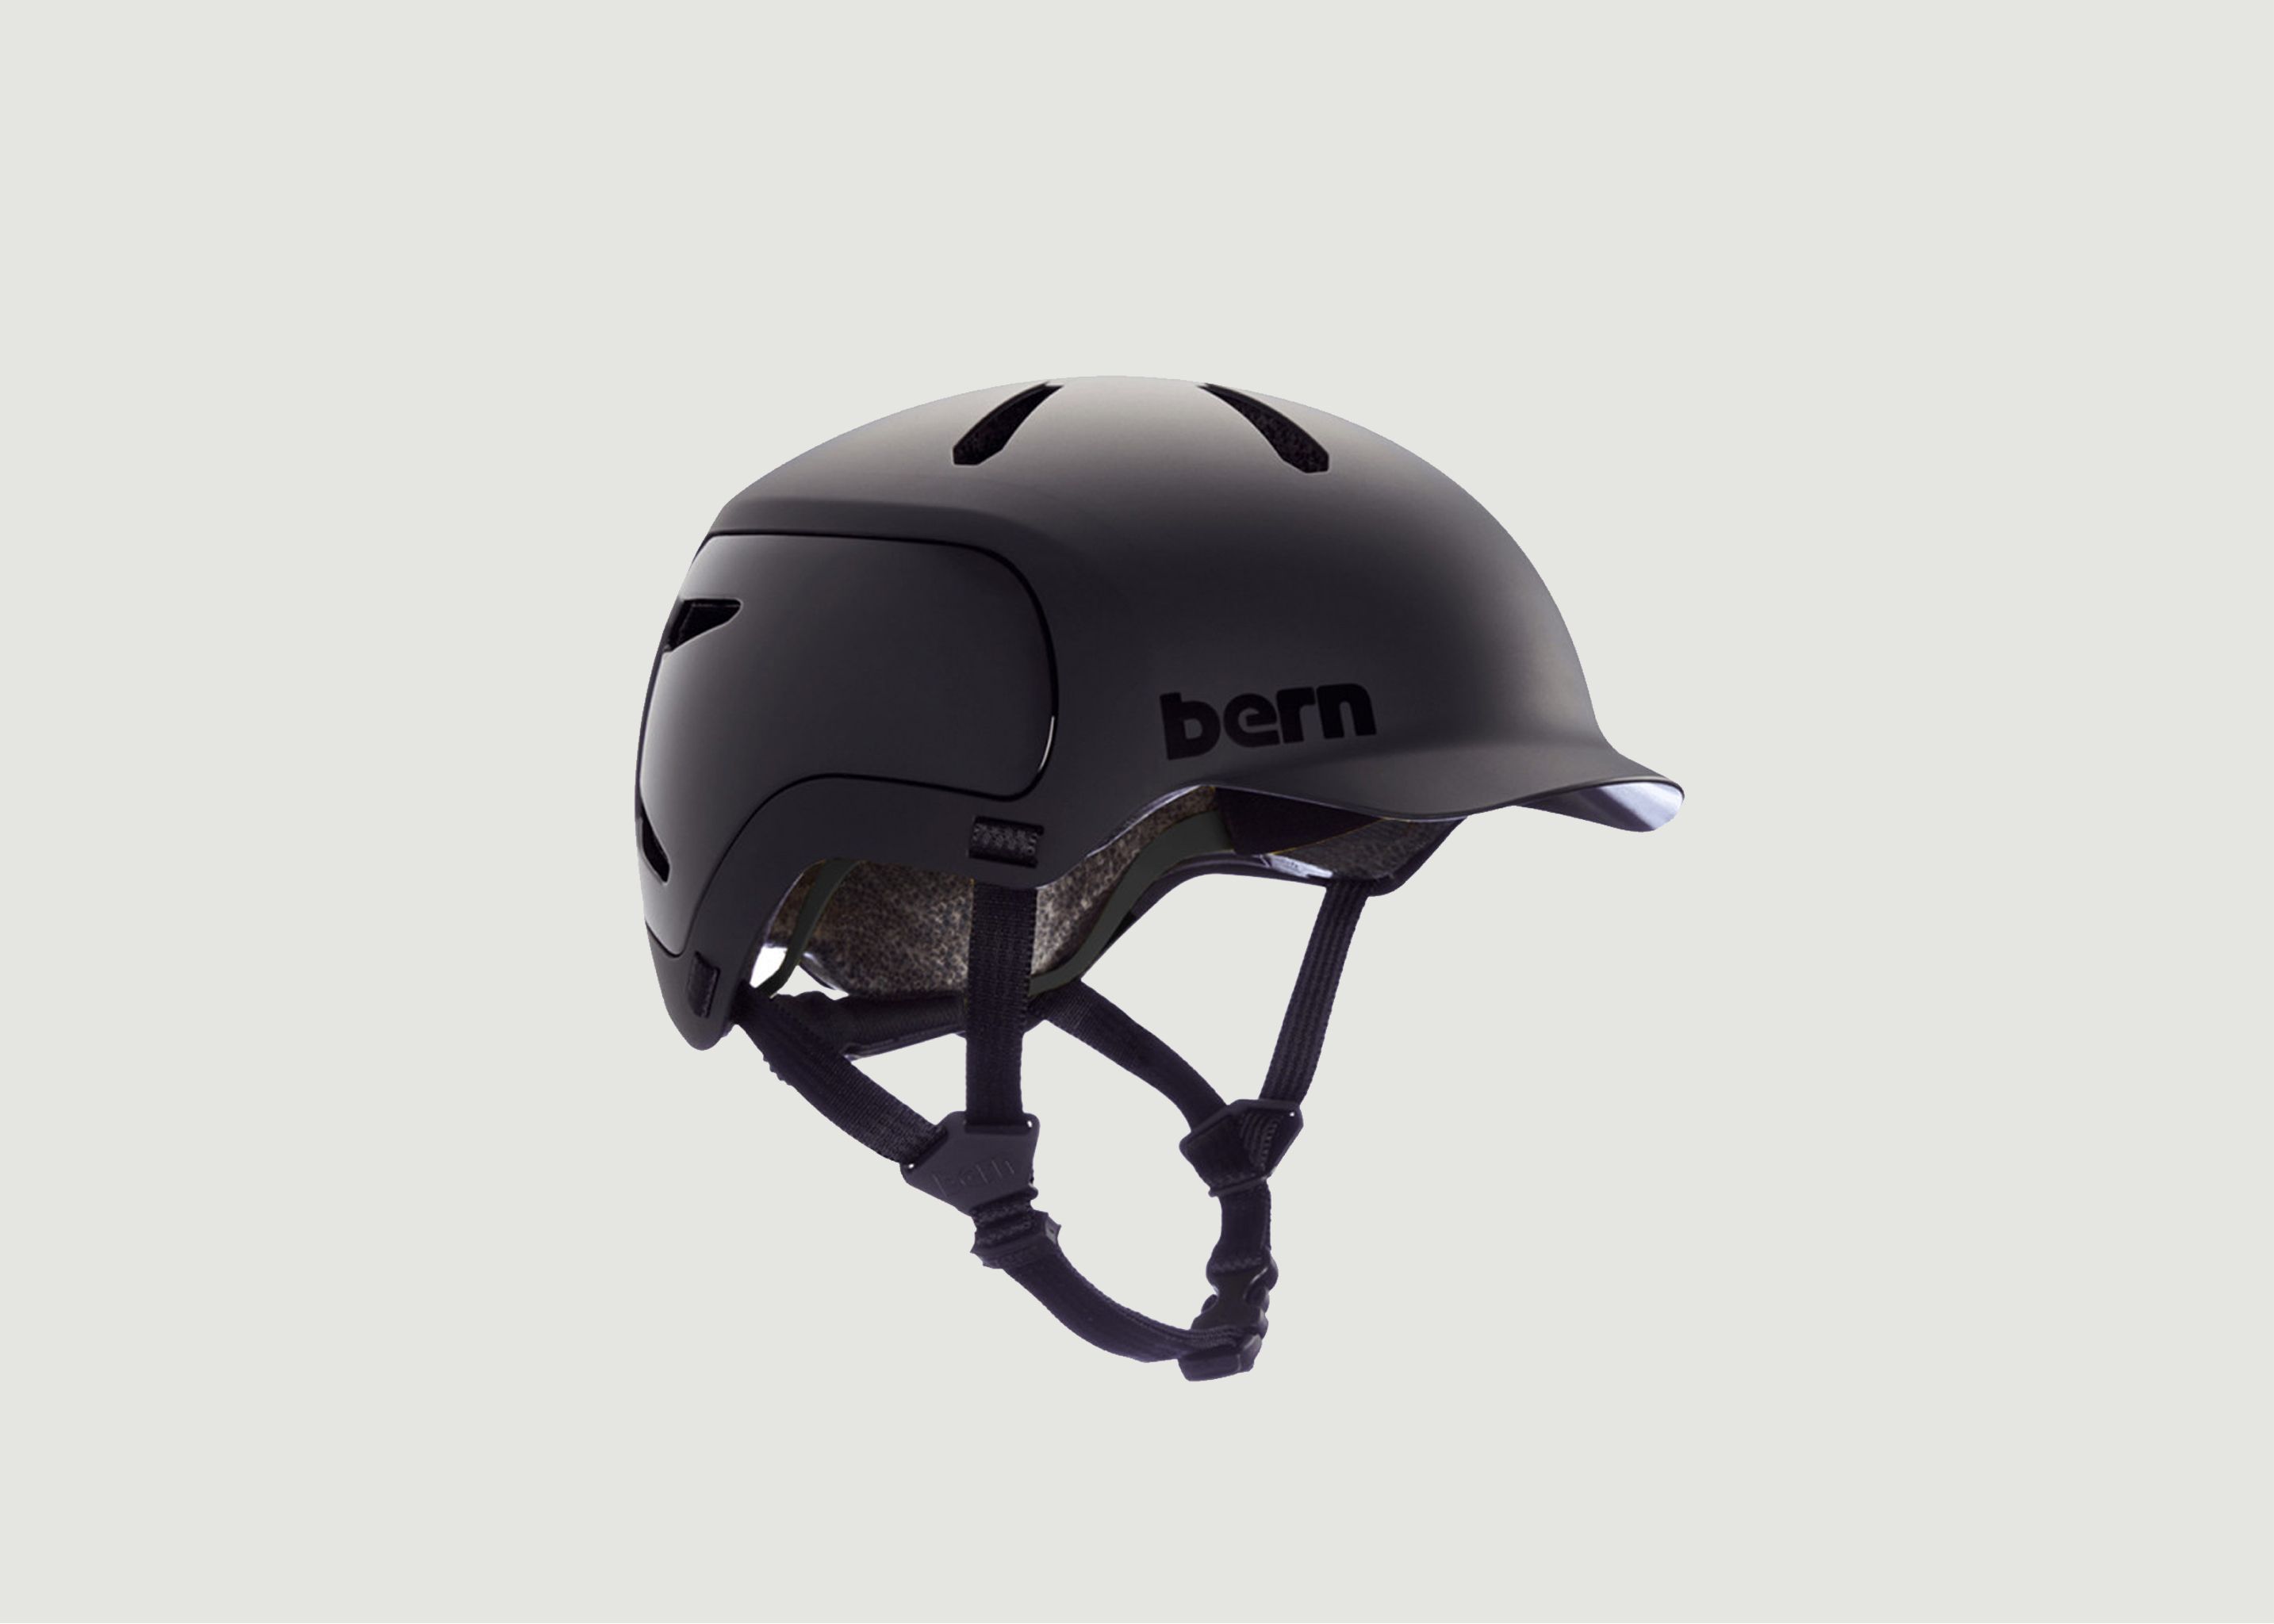 Watts 2.0 Bike Headset - Bern